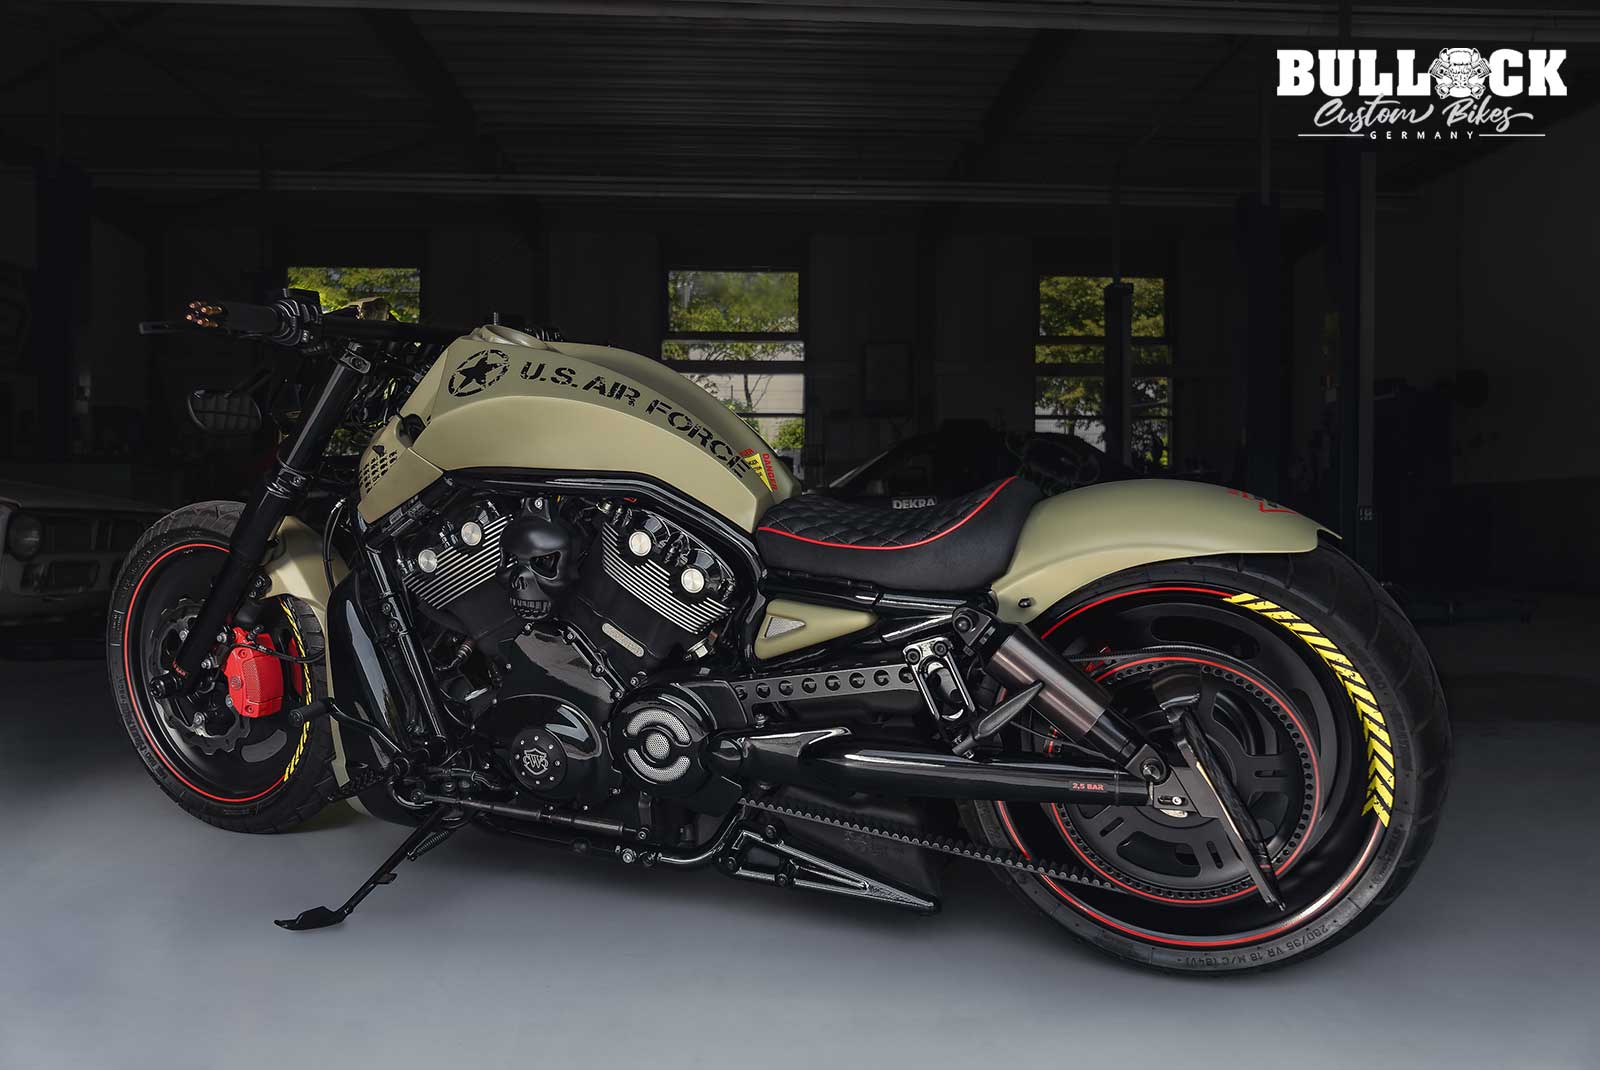 Harley V-Rod Custom Bike